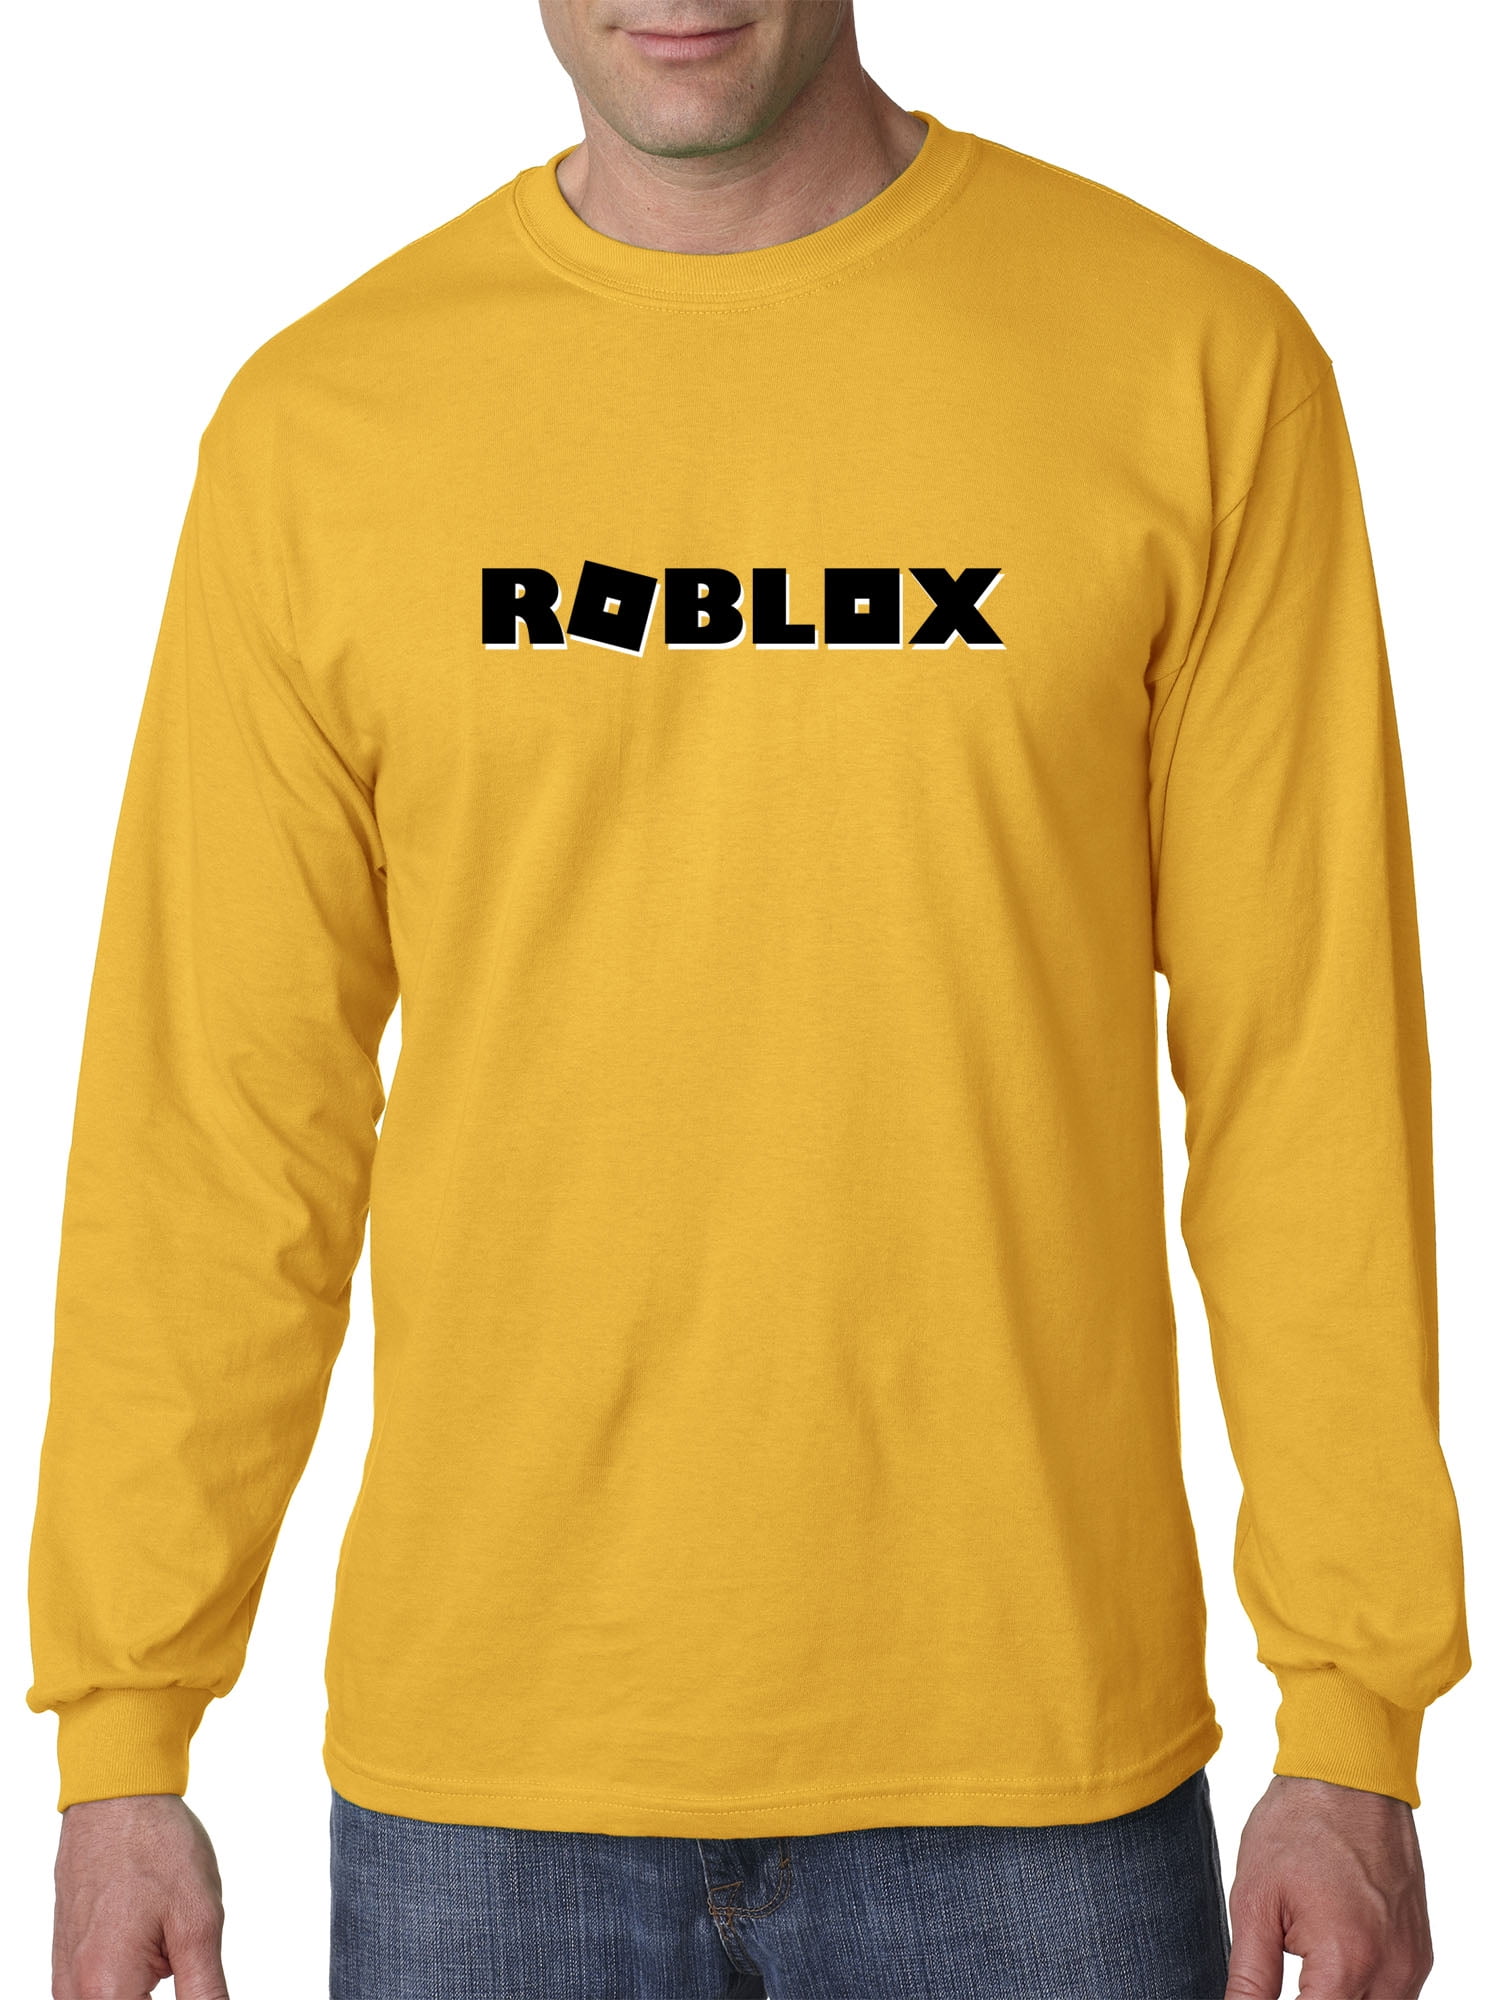 New Way New Way 1168 Unisex Long Sleeve T Shirt Roblox Block